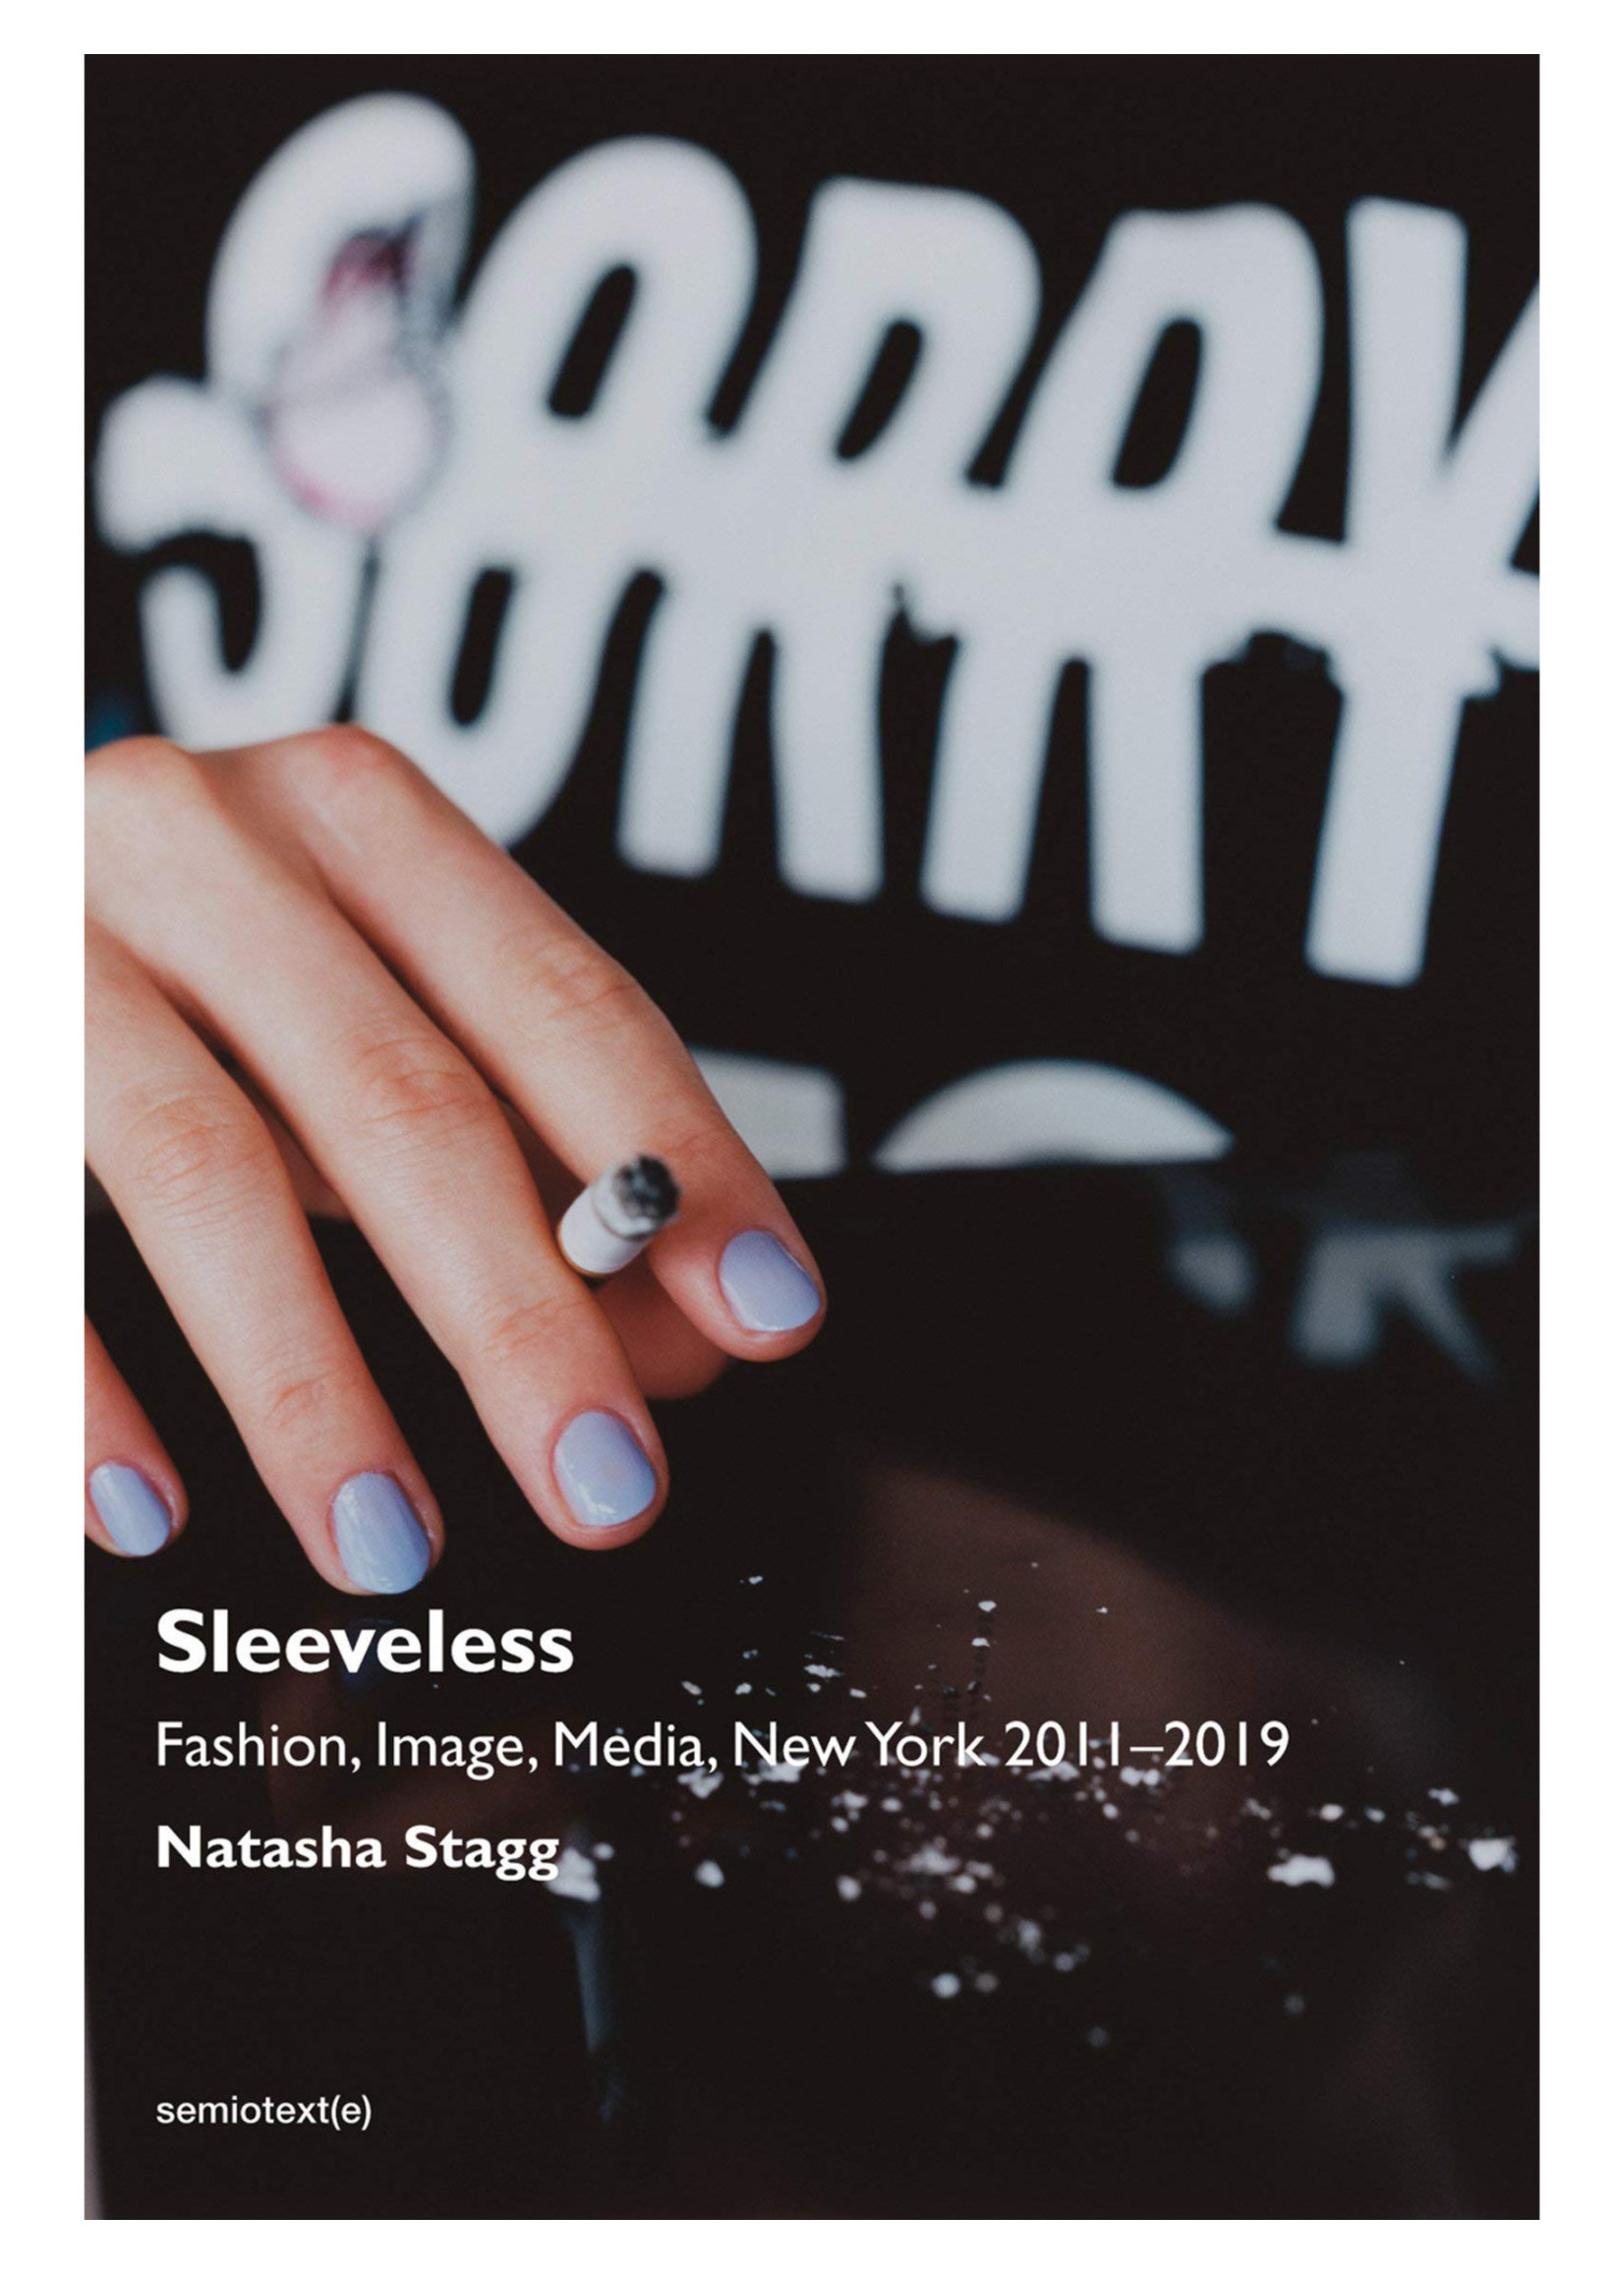 semiotext(e) Sleeveless: Fashion, Image, Media, New York 2011 - 2019